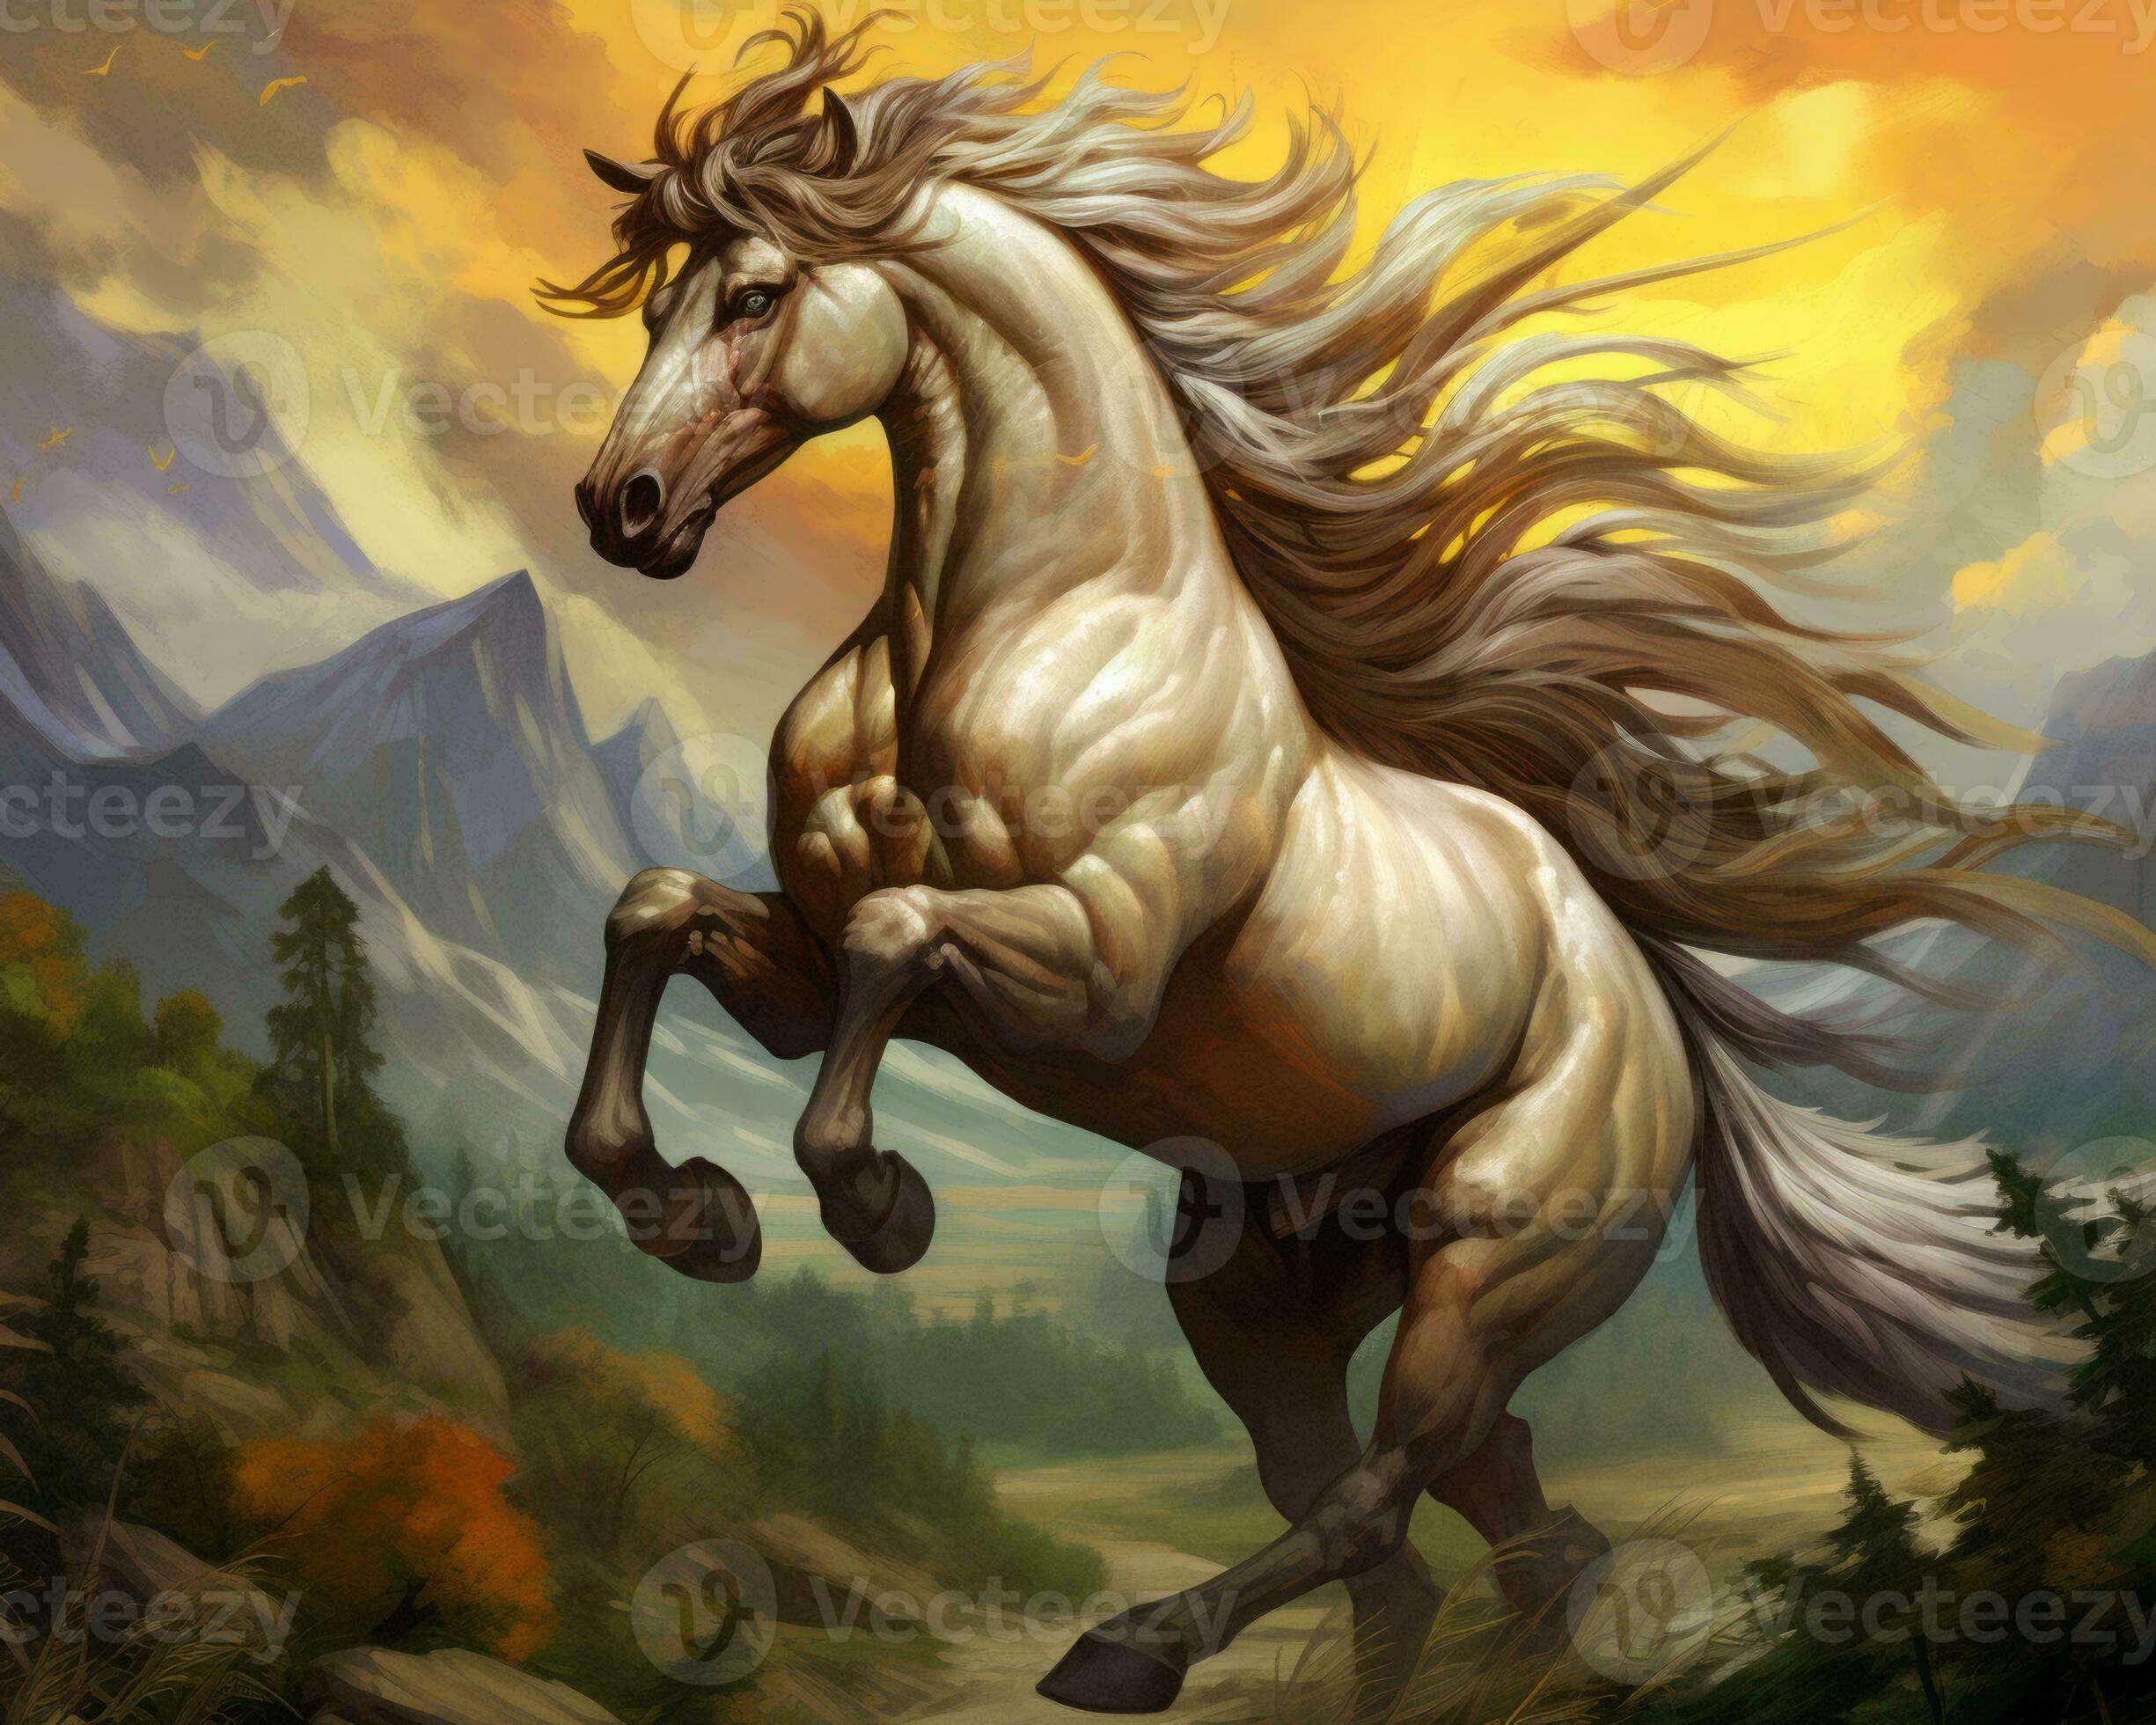 The Long Hair Beautiful White Horse - Horses - Animals Paintings